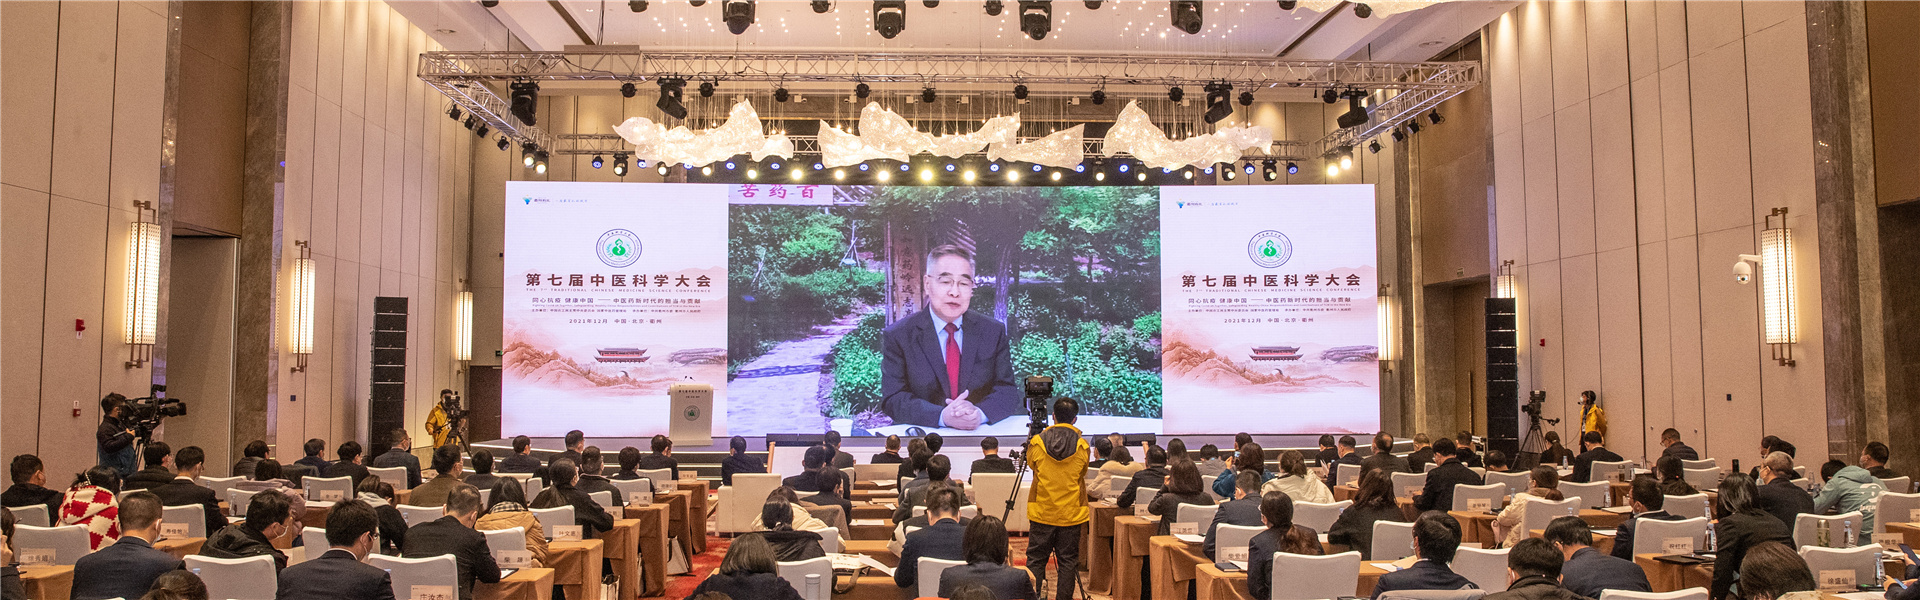 Medical discoveries, TCM's future discussed at Quzhou confab